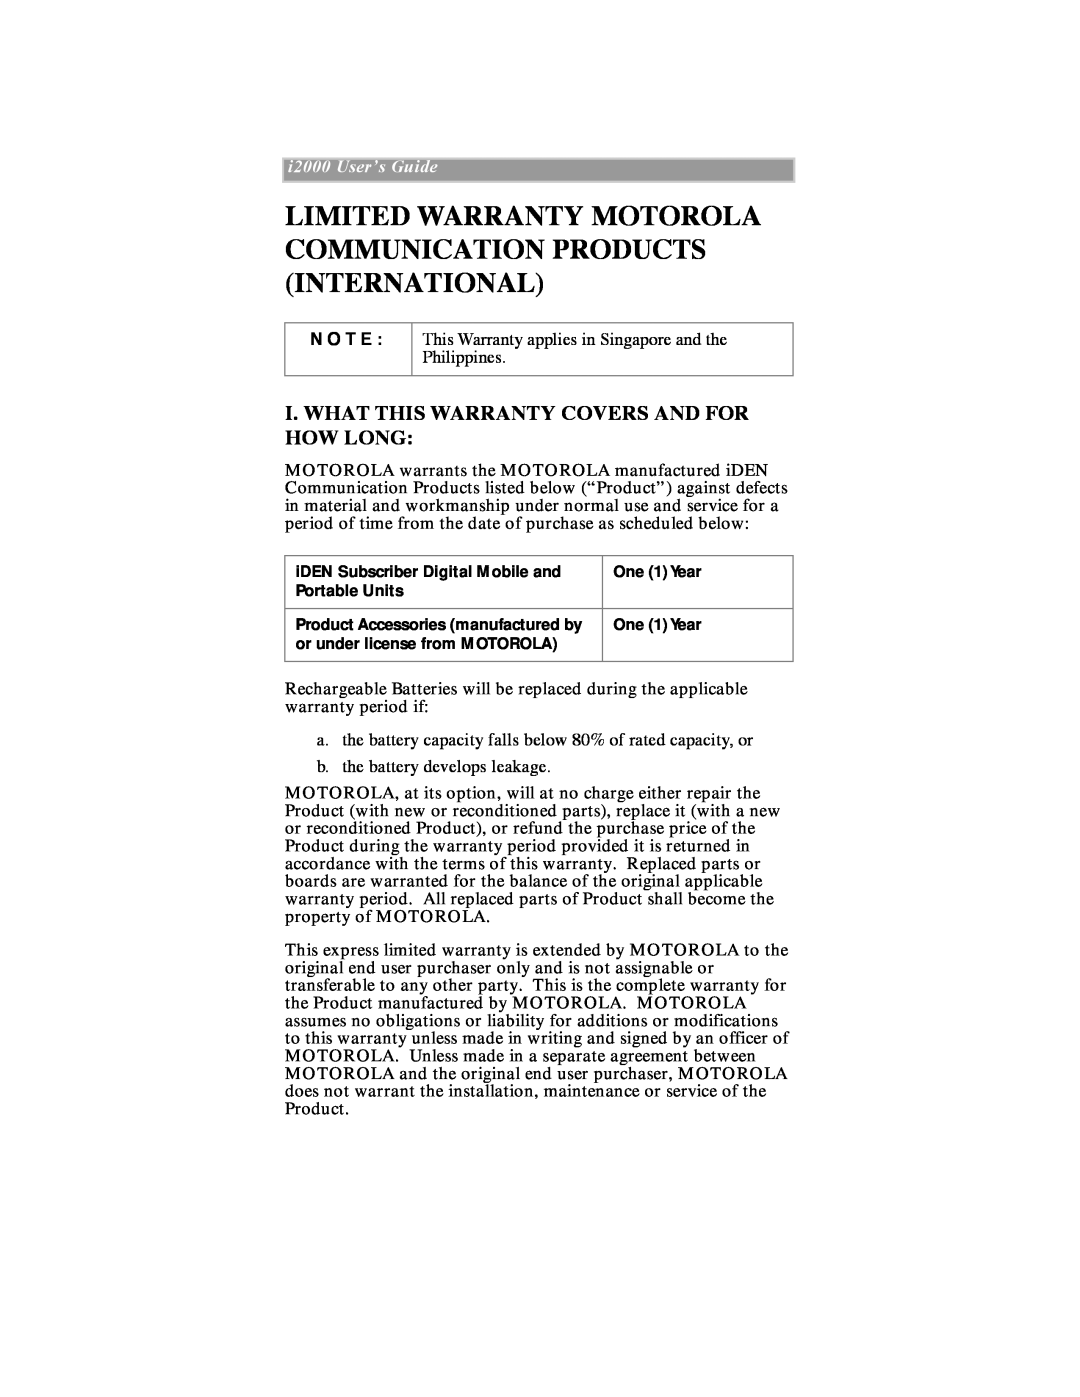 Motorola iDEN manual Limited Warranty Motorola Communication Products International, i2000 UserÕs Guide, N O T E 